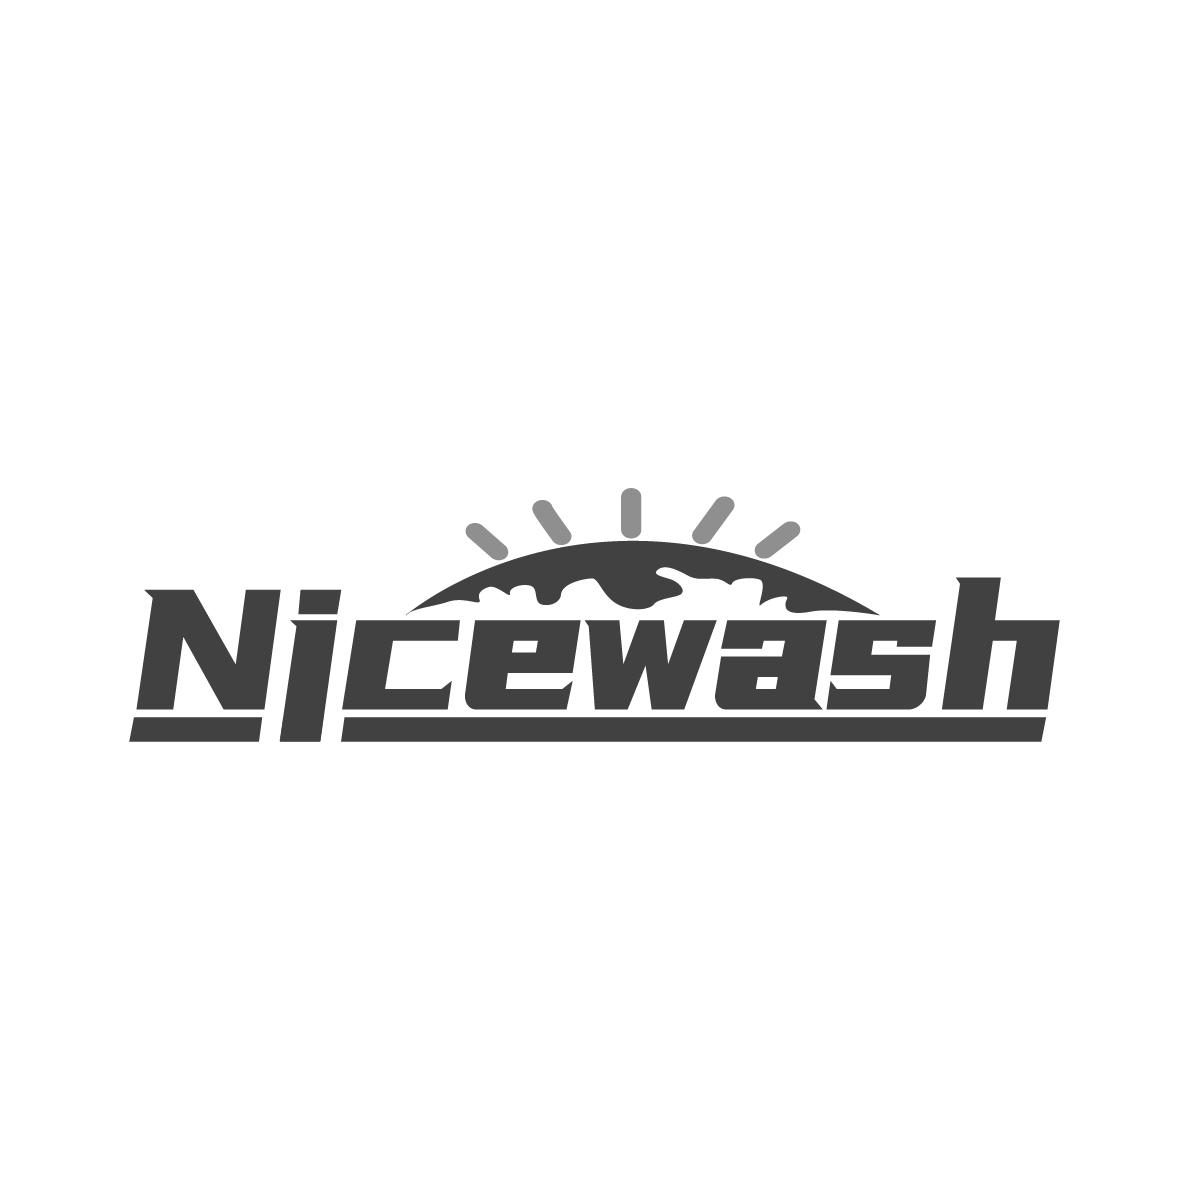 NICEWASH